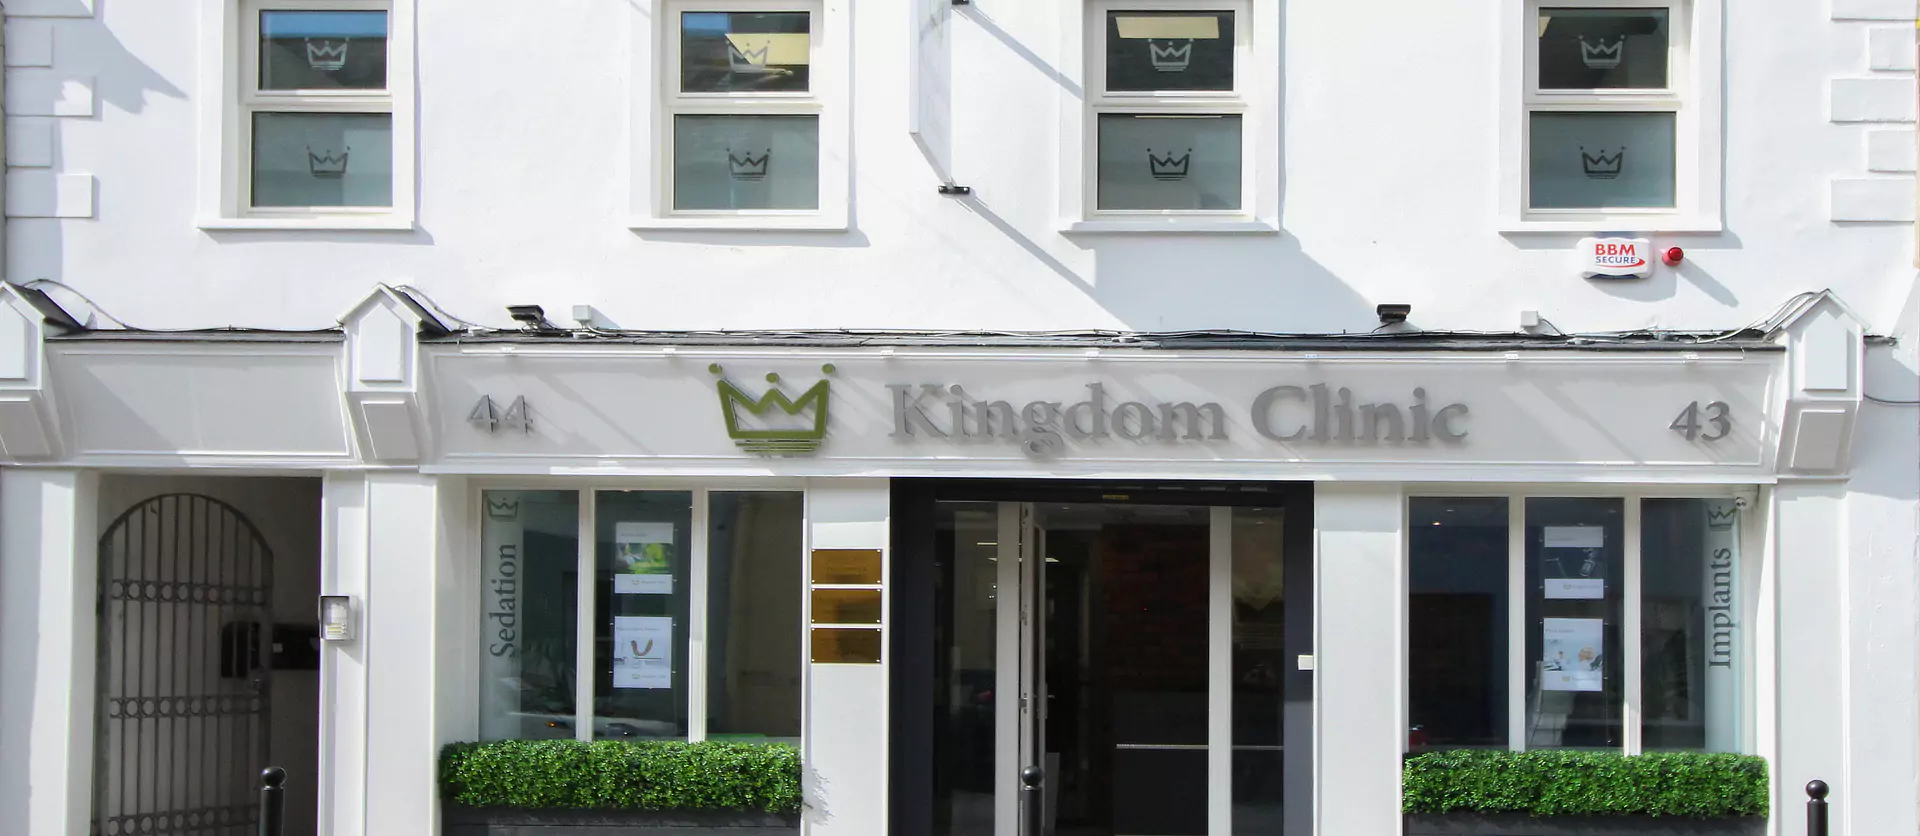 Kingdom Clinic, Killarney